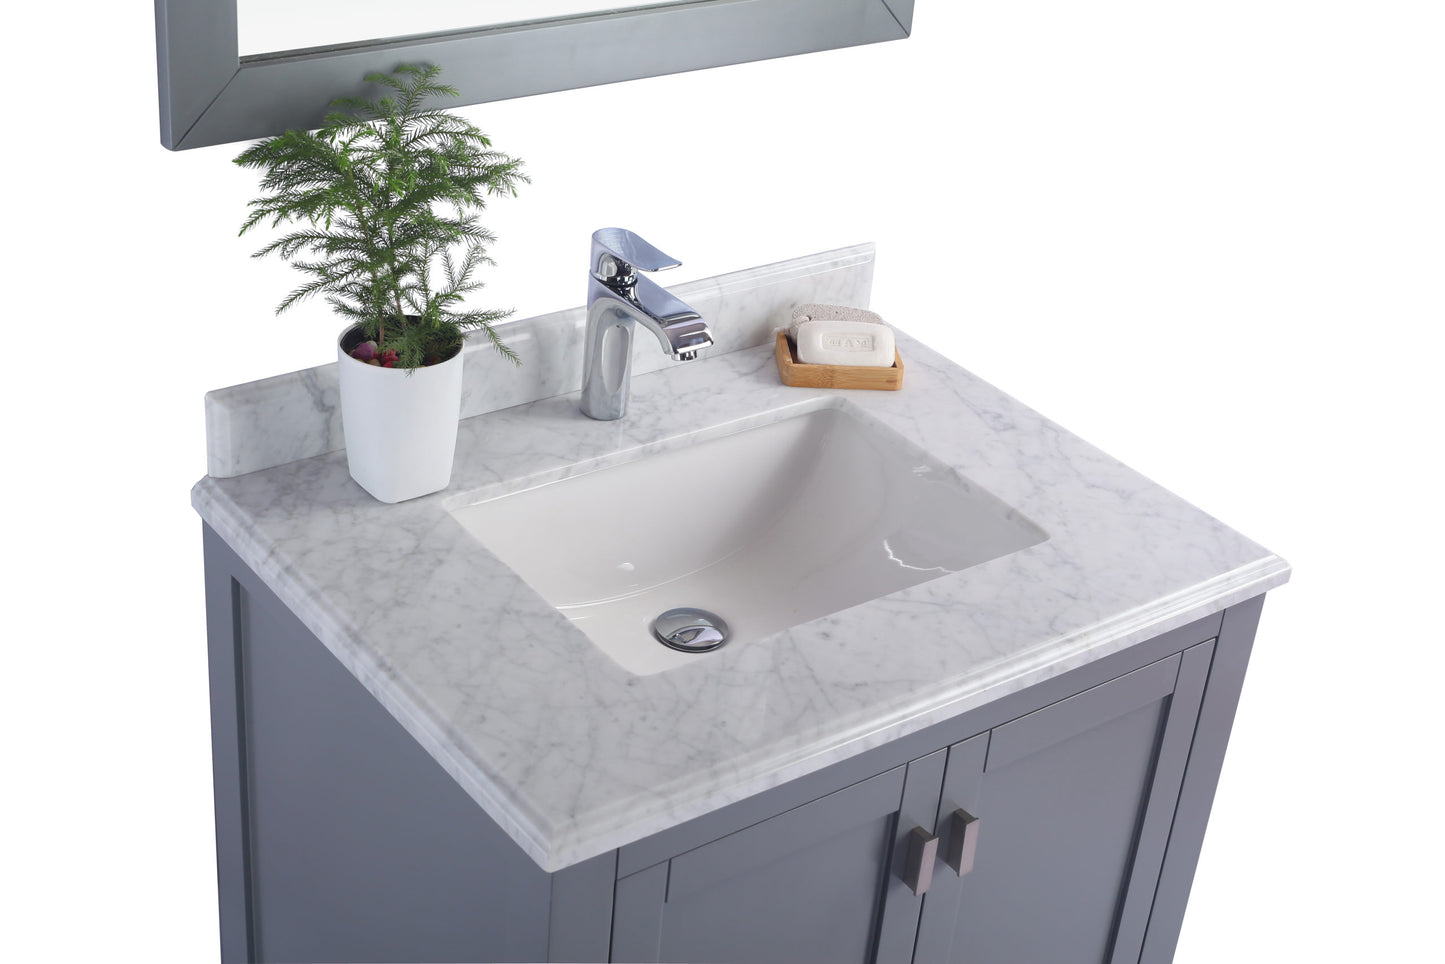 Wilson 30" Grey Bathroom Vanity with White Carrara Marble Countertop